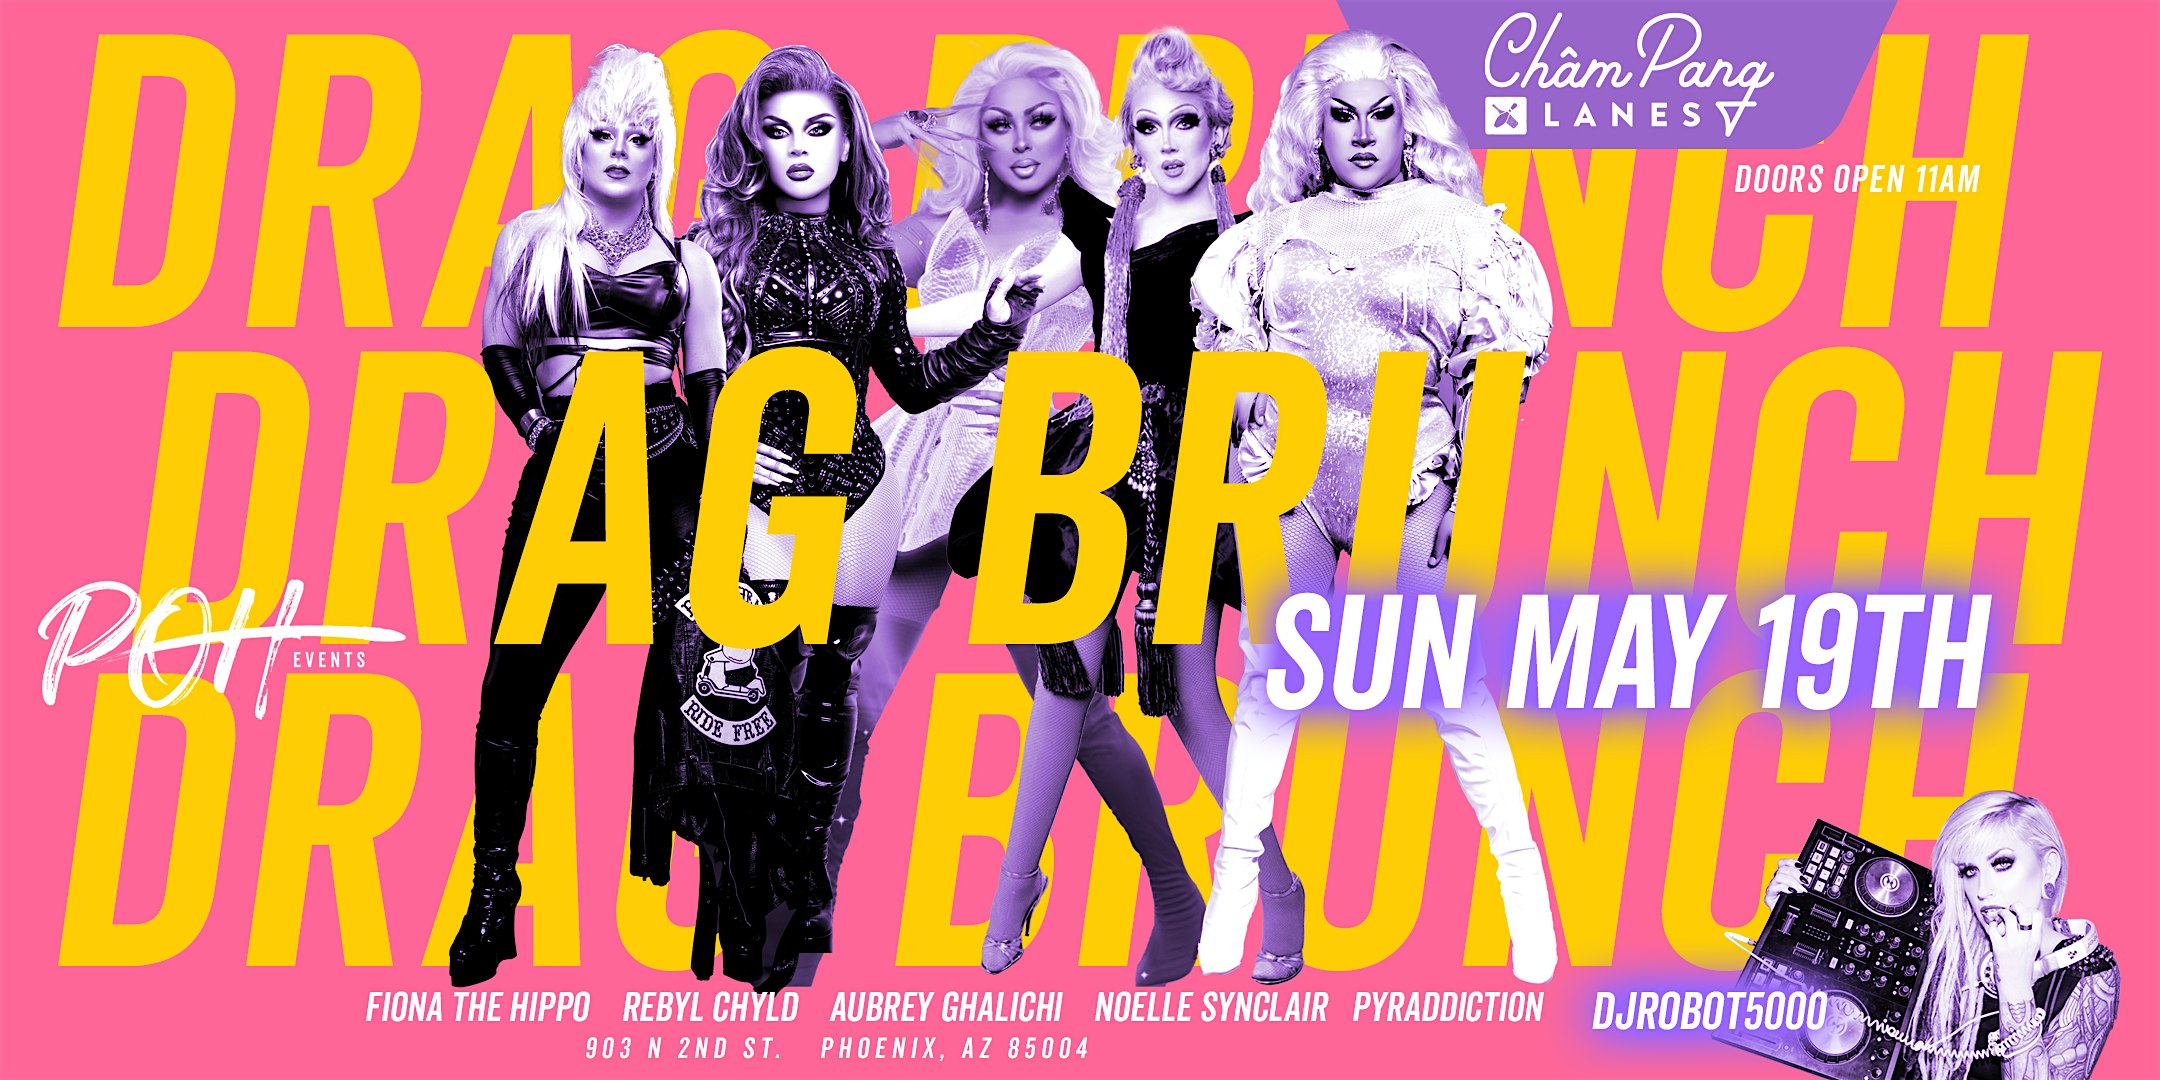 Fiona & Friends Drag Brunch | Drag Queen Show at Ch\u00e2m Pang Lanes